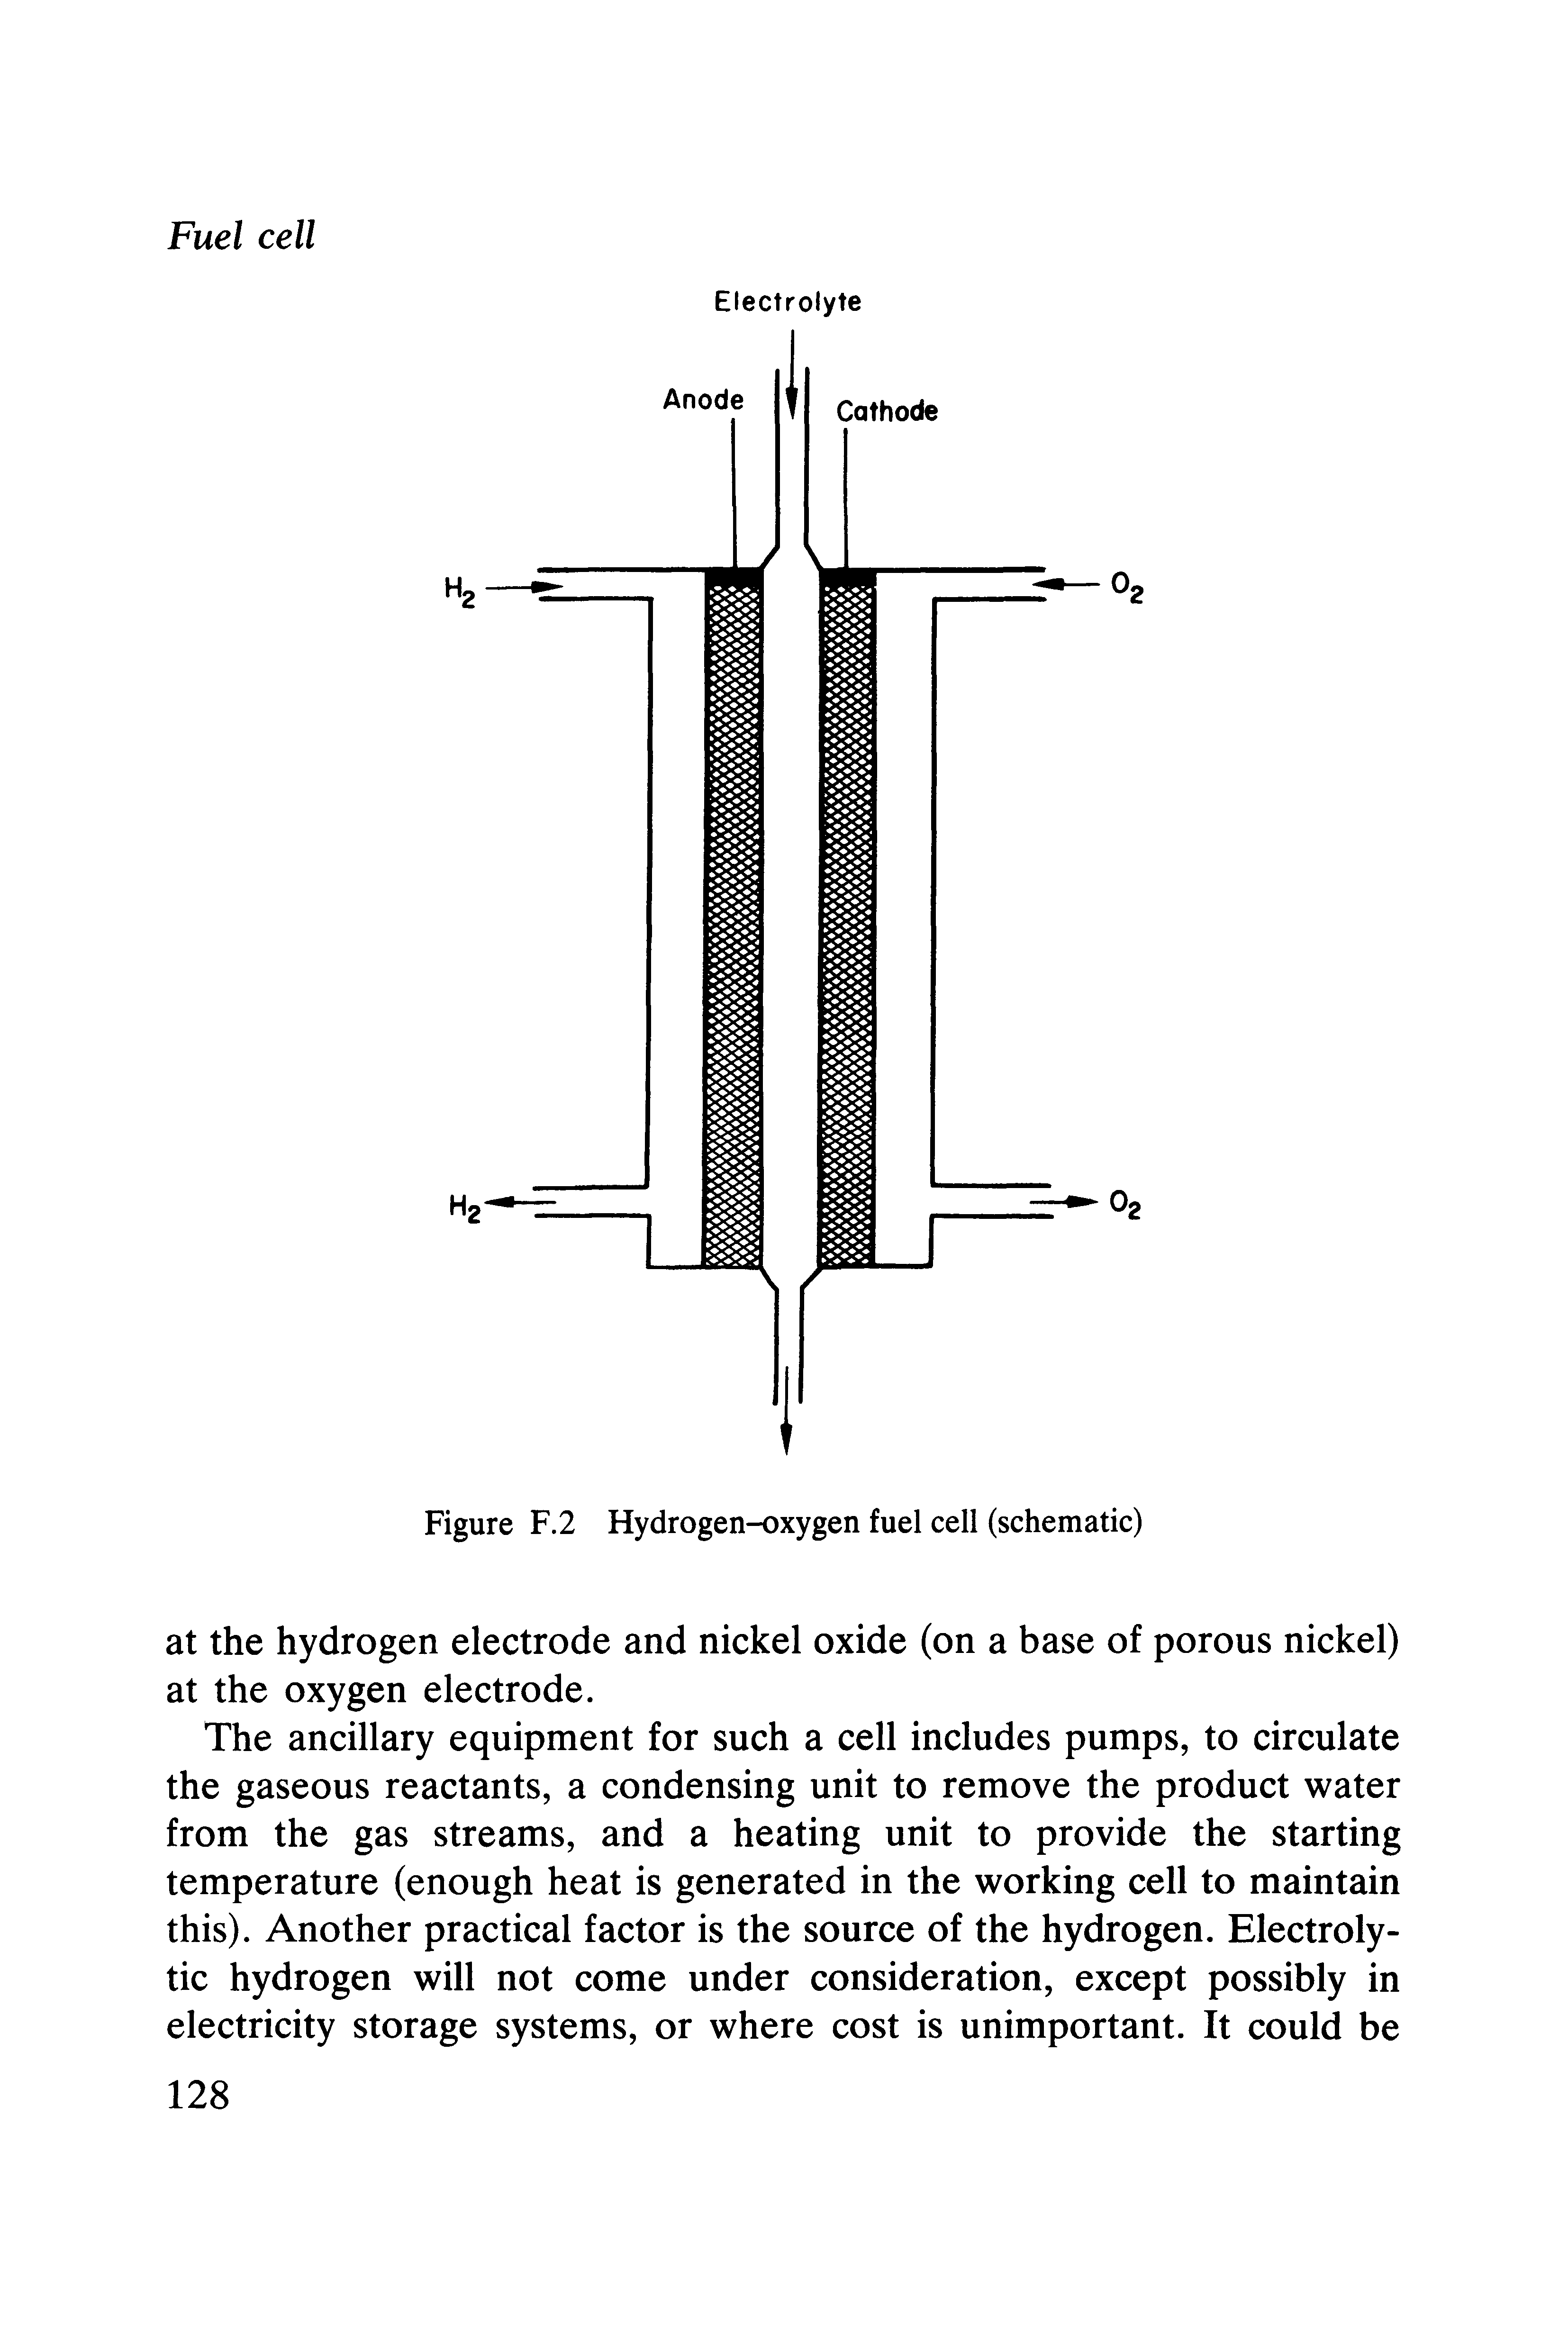 Figure F.2 Hydrogen-oxygen fuel cell (schematic)...